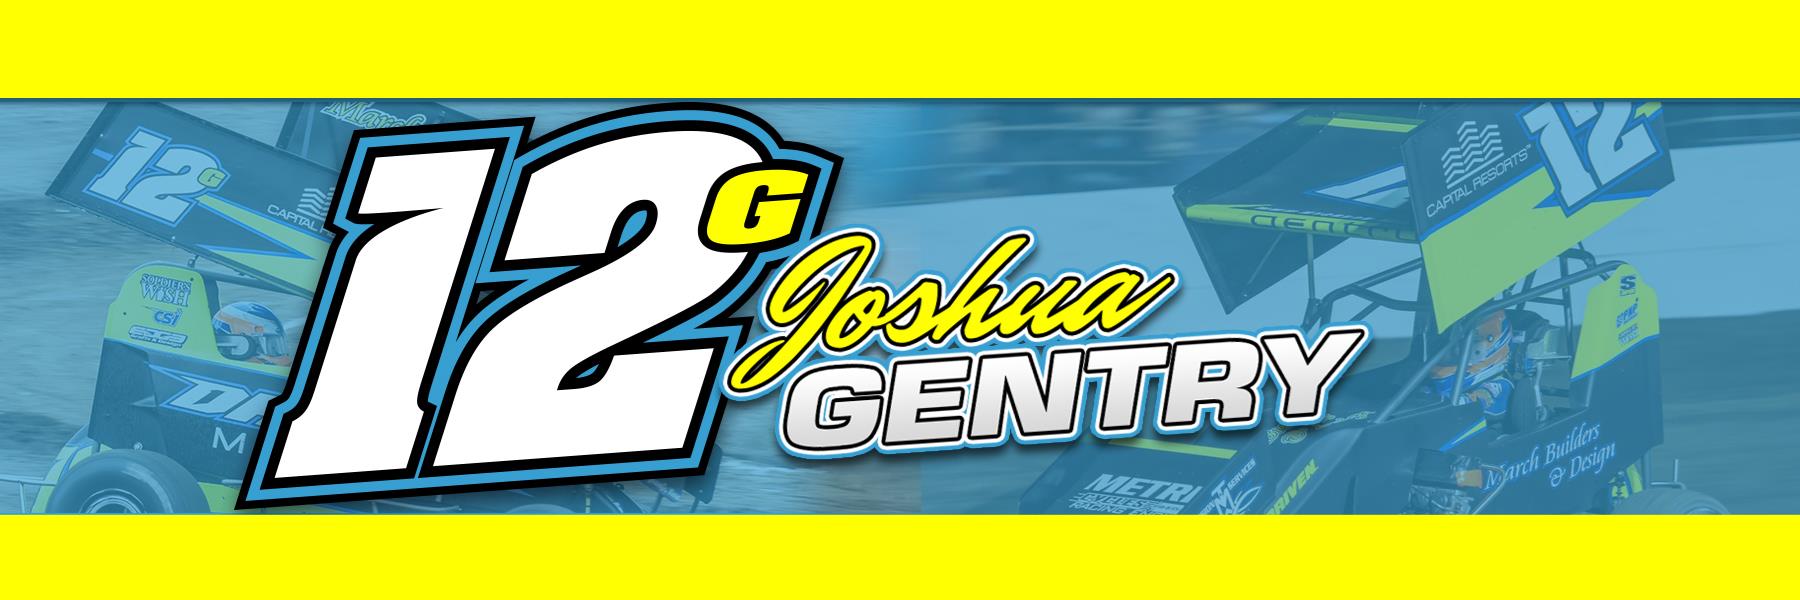 Joshua Gentry